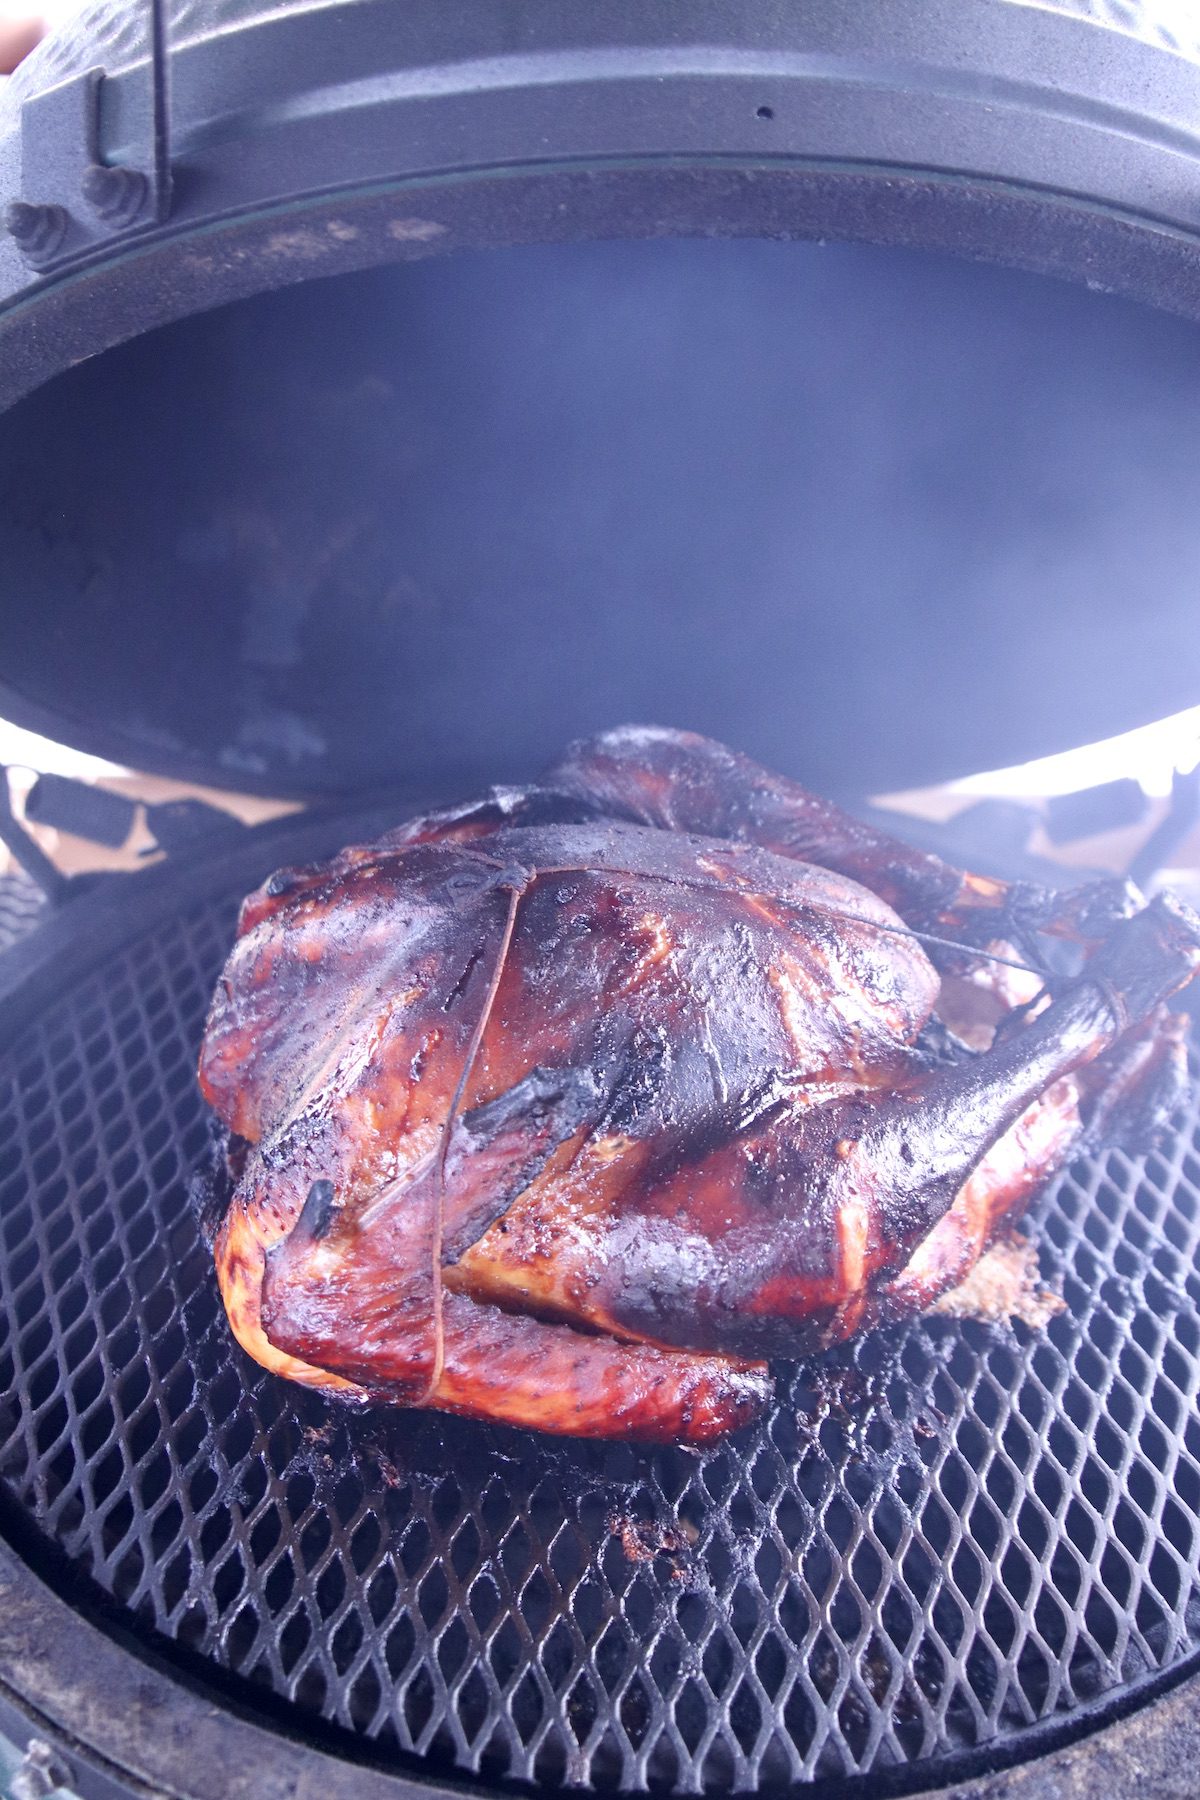 caramelized turkey on a grill